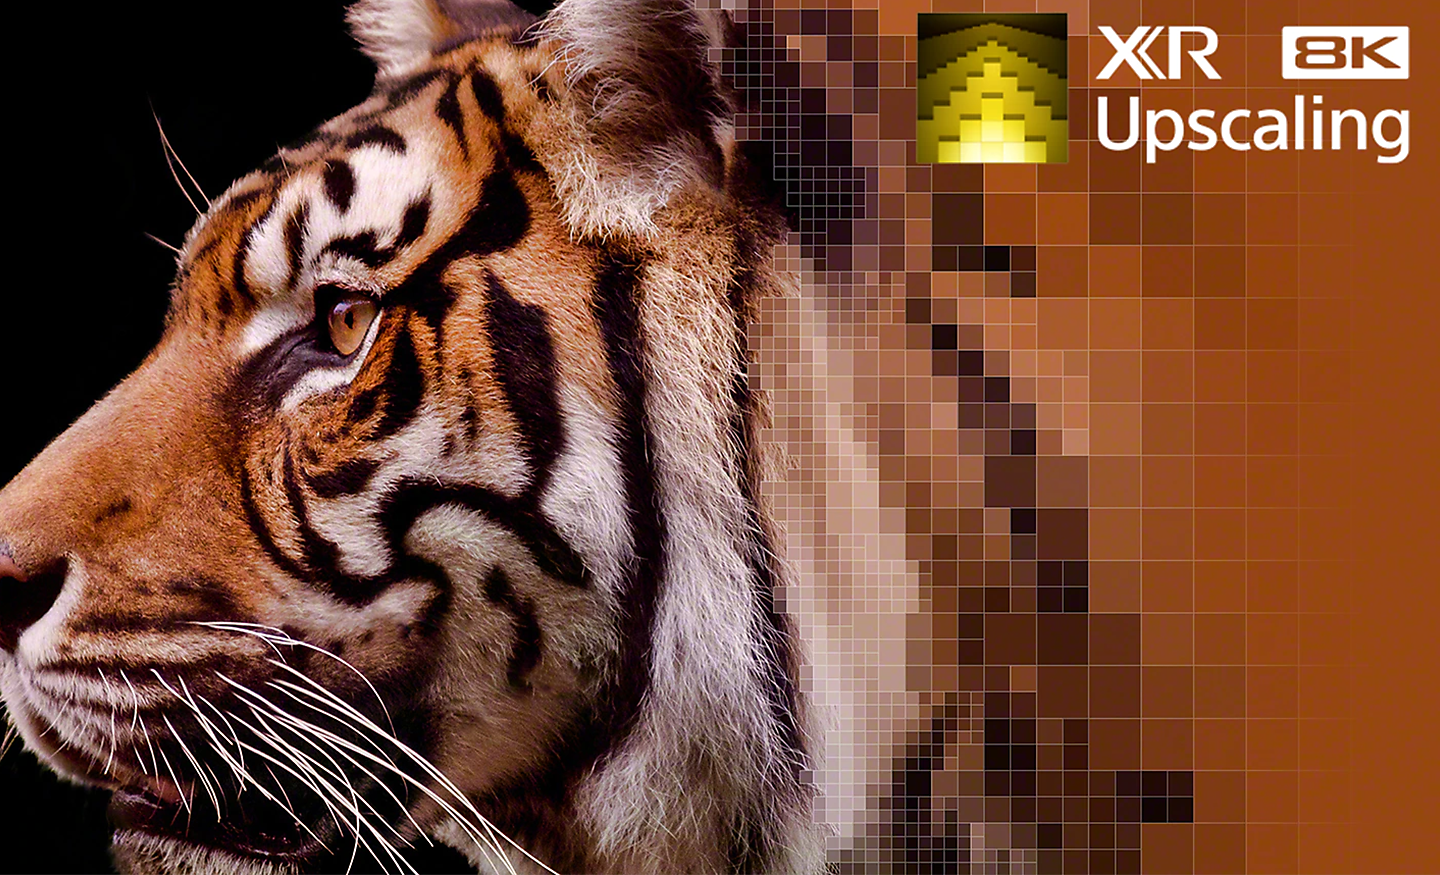 Gros plan des rayures de la fourrure d'un tigre illustrant l'effet de la conversion en 8K XR